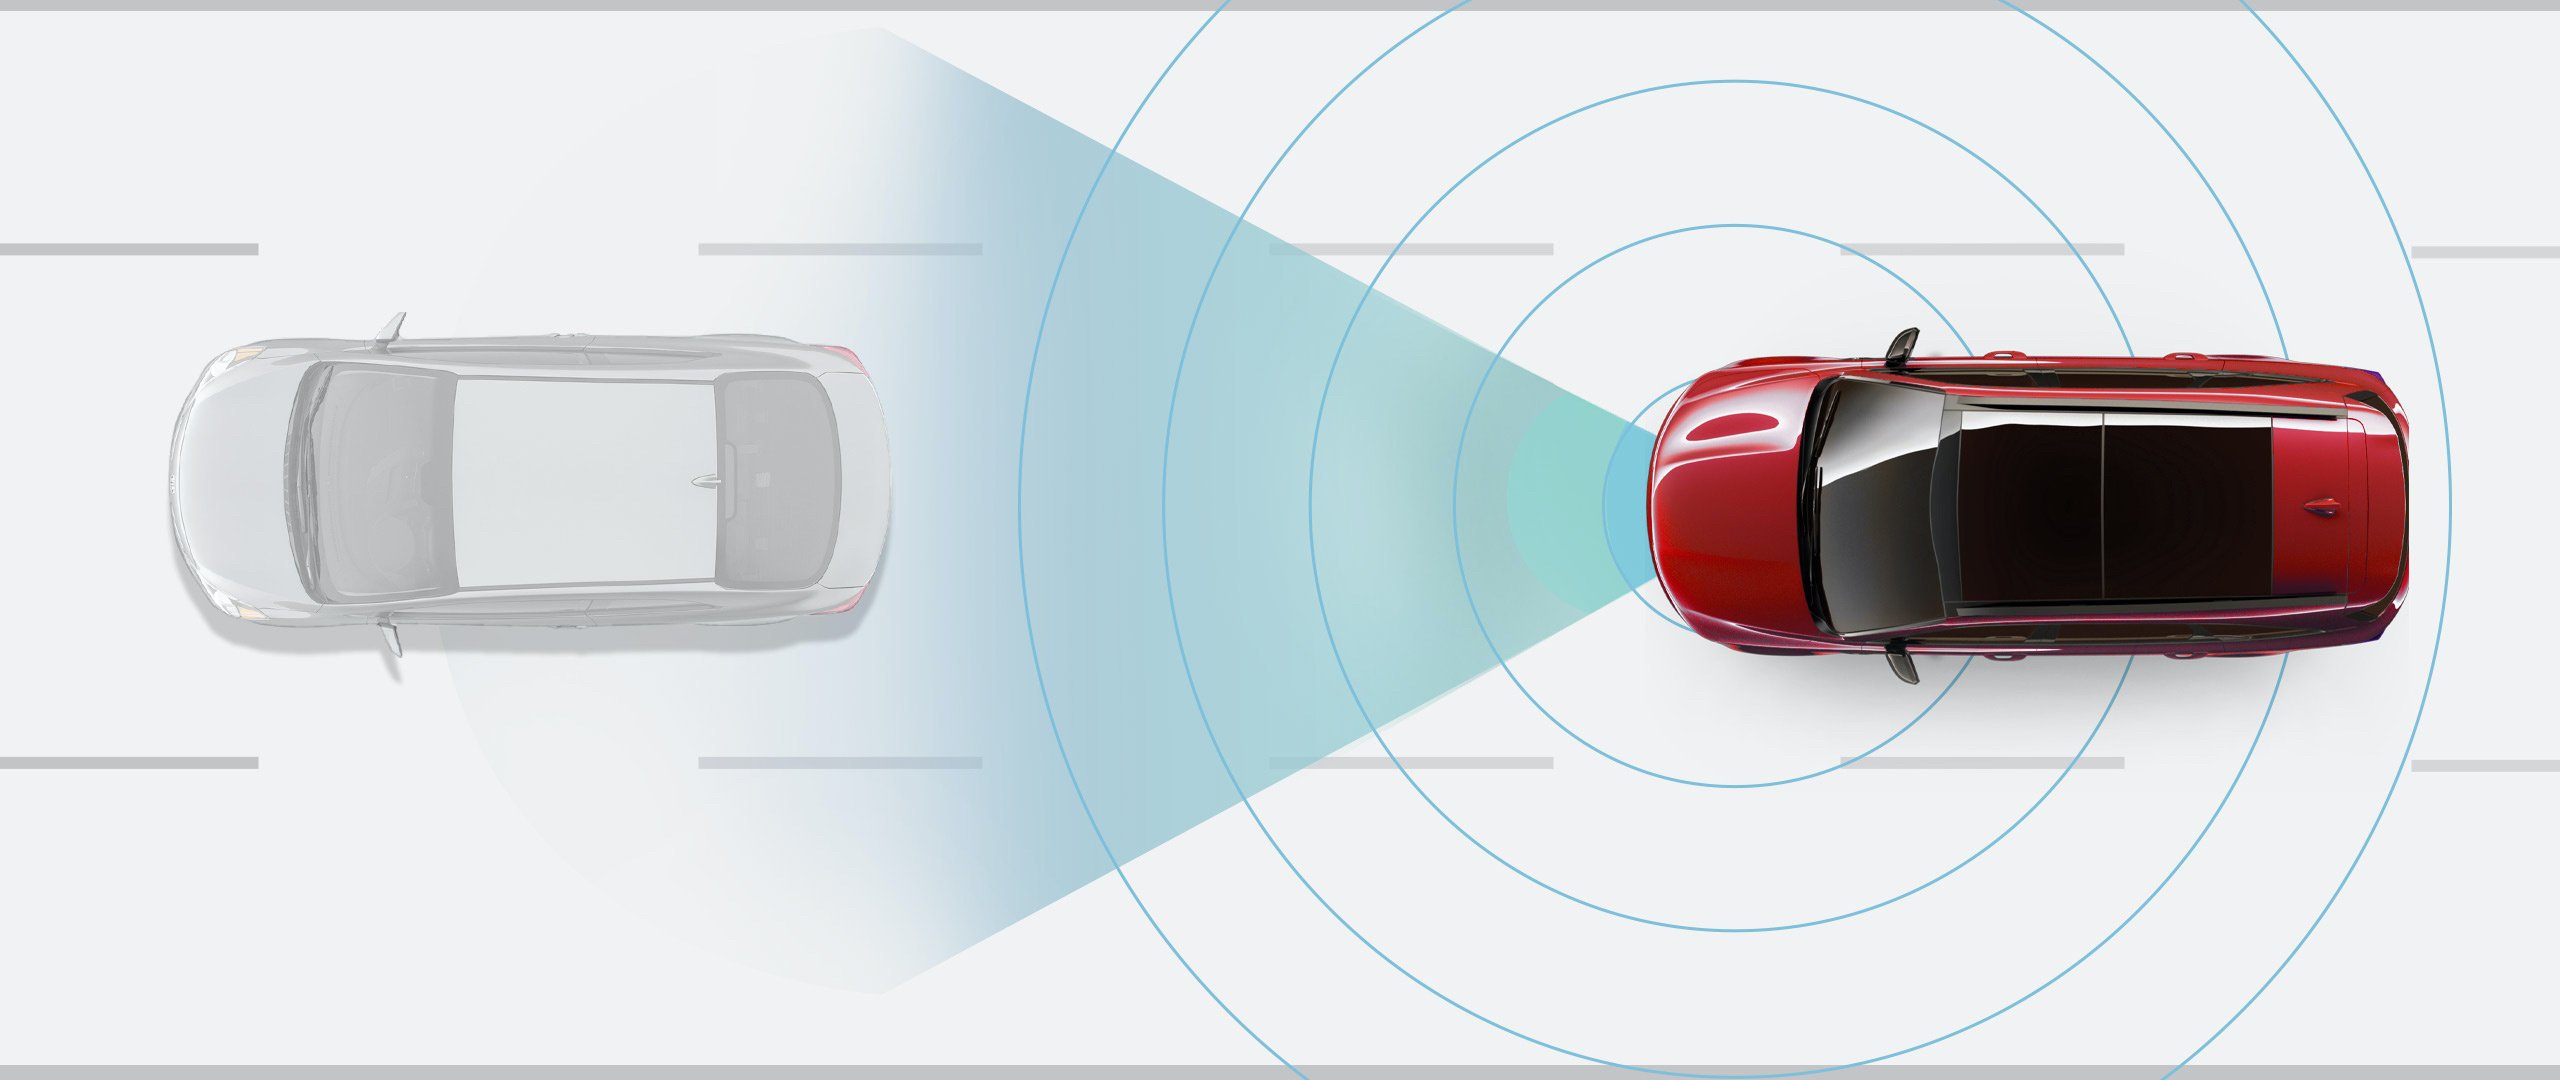 2022 Kia Sorento Hybrid Navigation-Based Smart Cruise Control With Highway Drive Assist